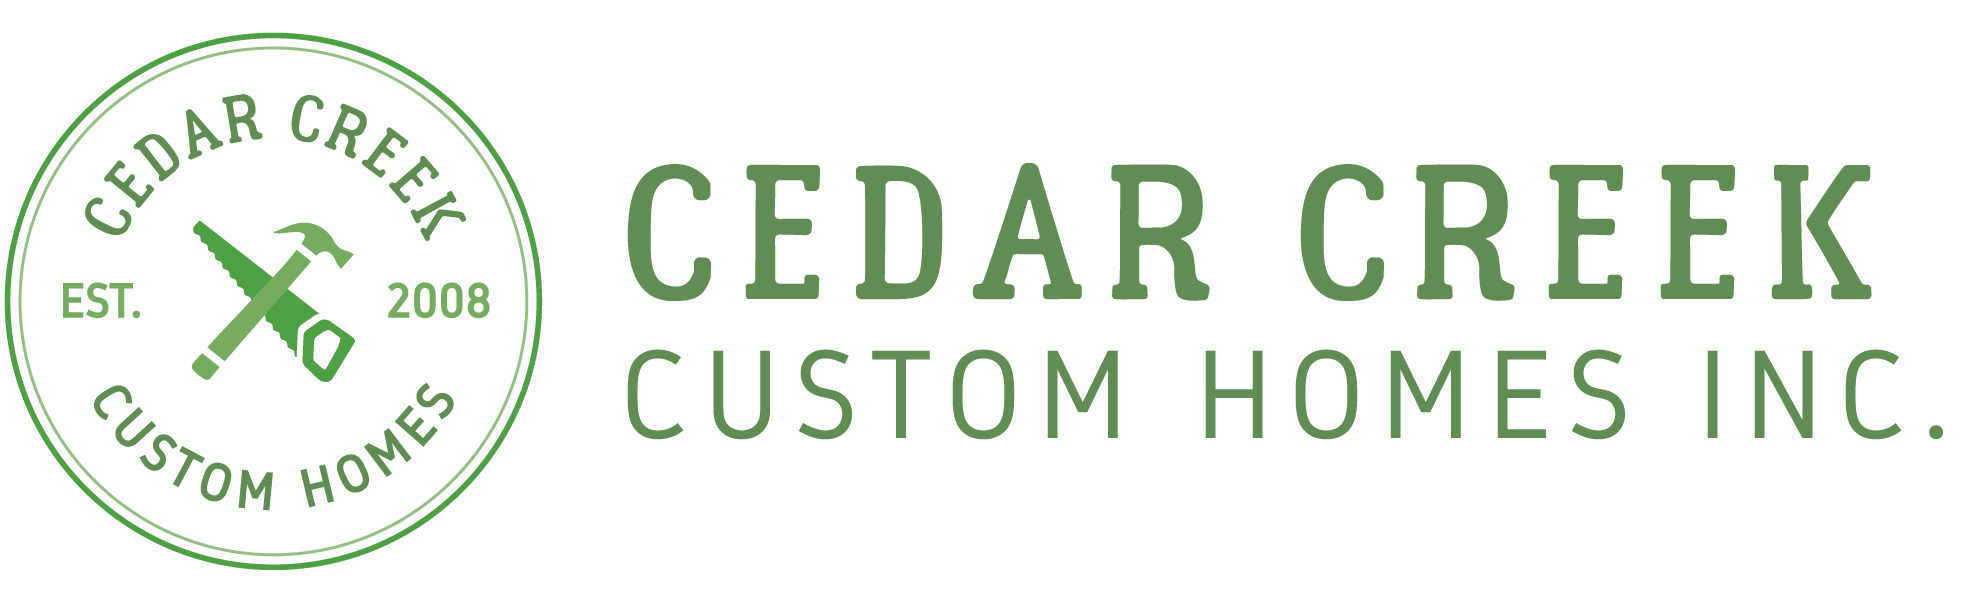 Cedar Creek Custom Homes